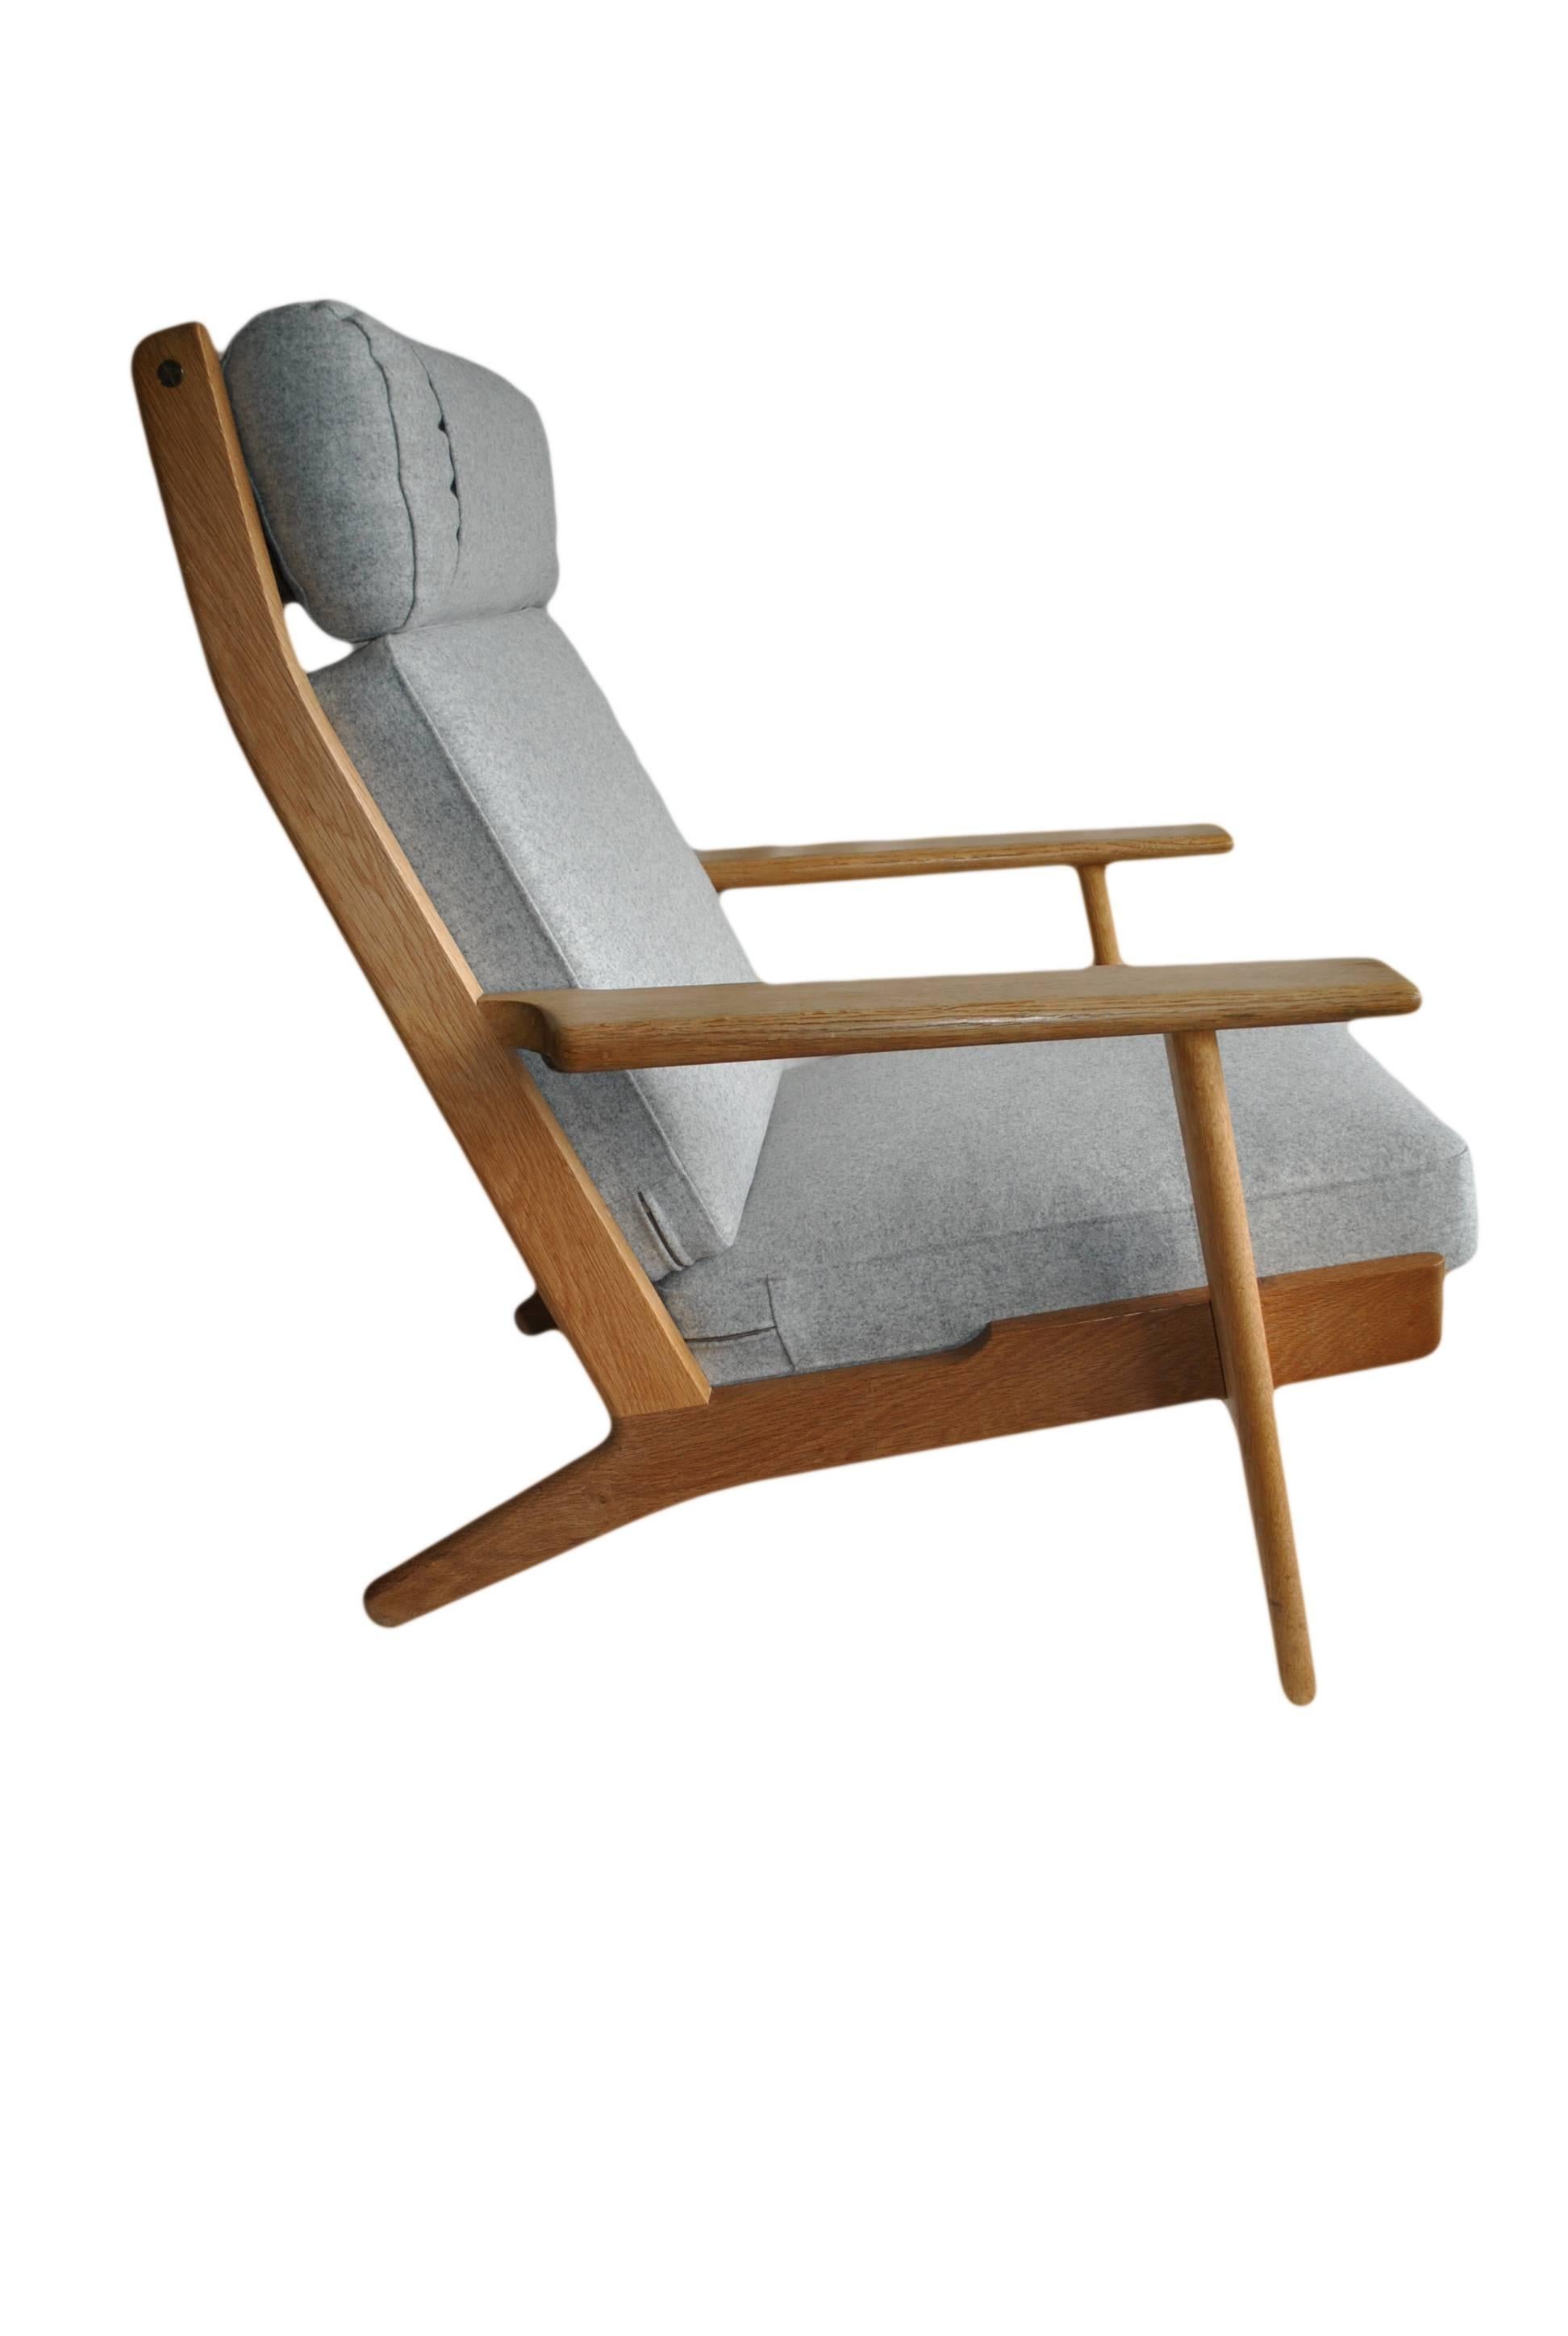 Oak Hans Wegner GE290 Lounge Chair, 1950s Original. Fully refurbished.